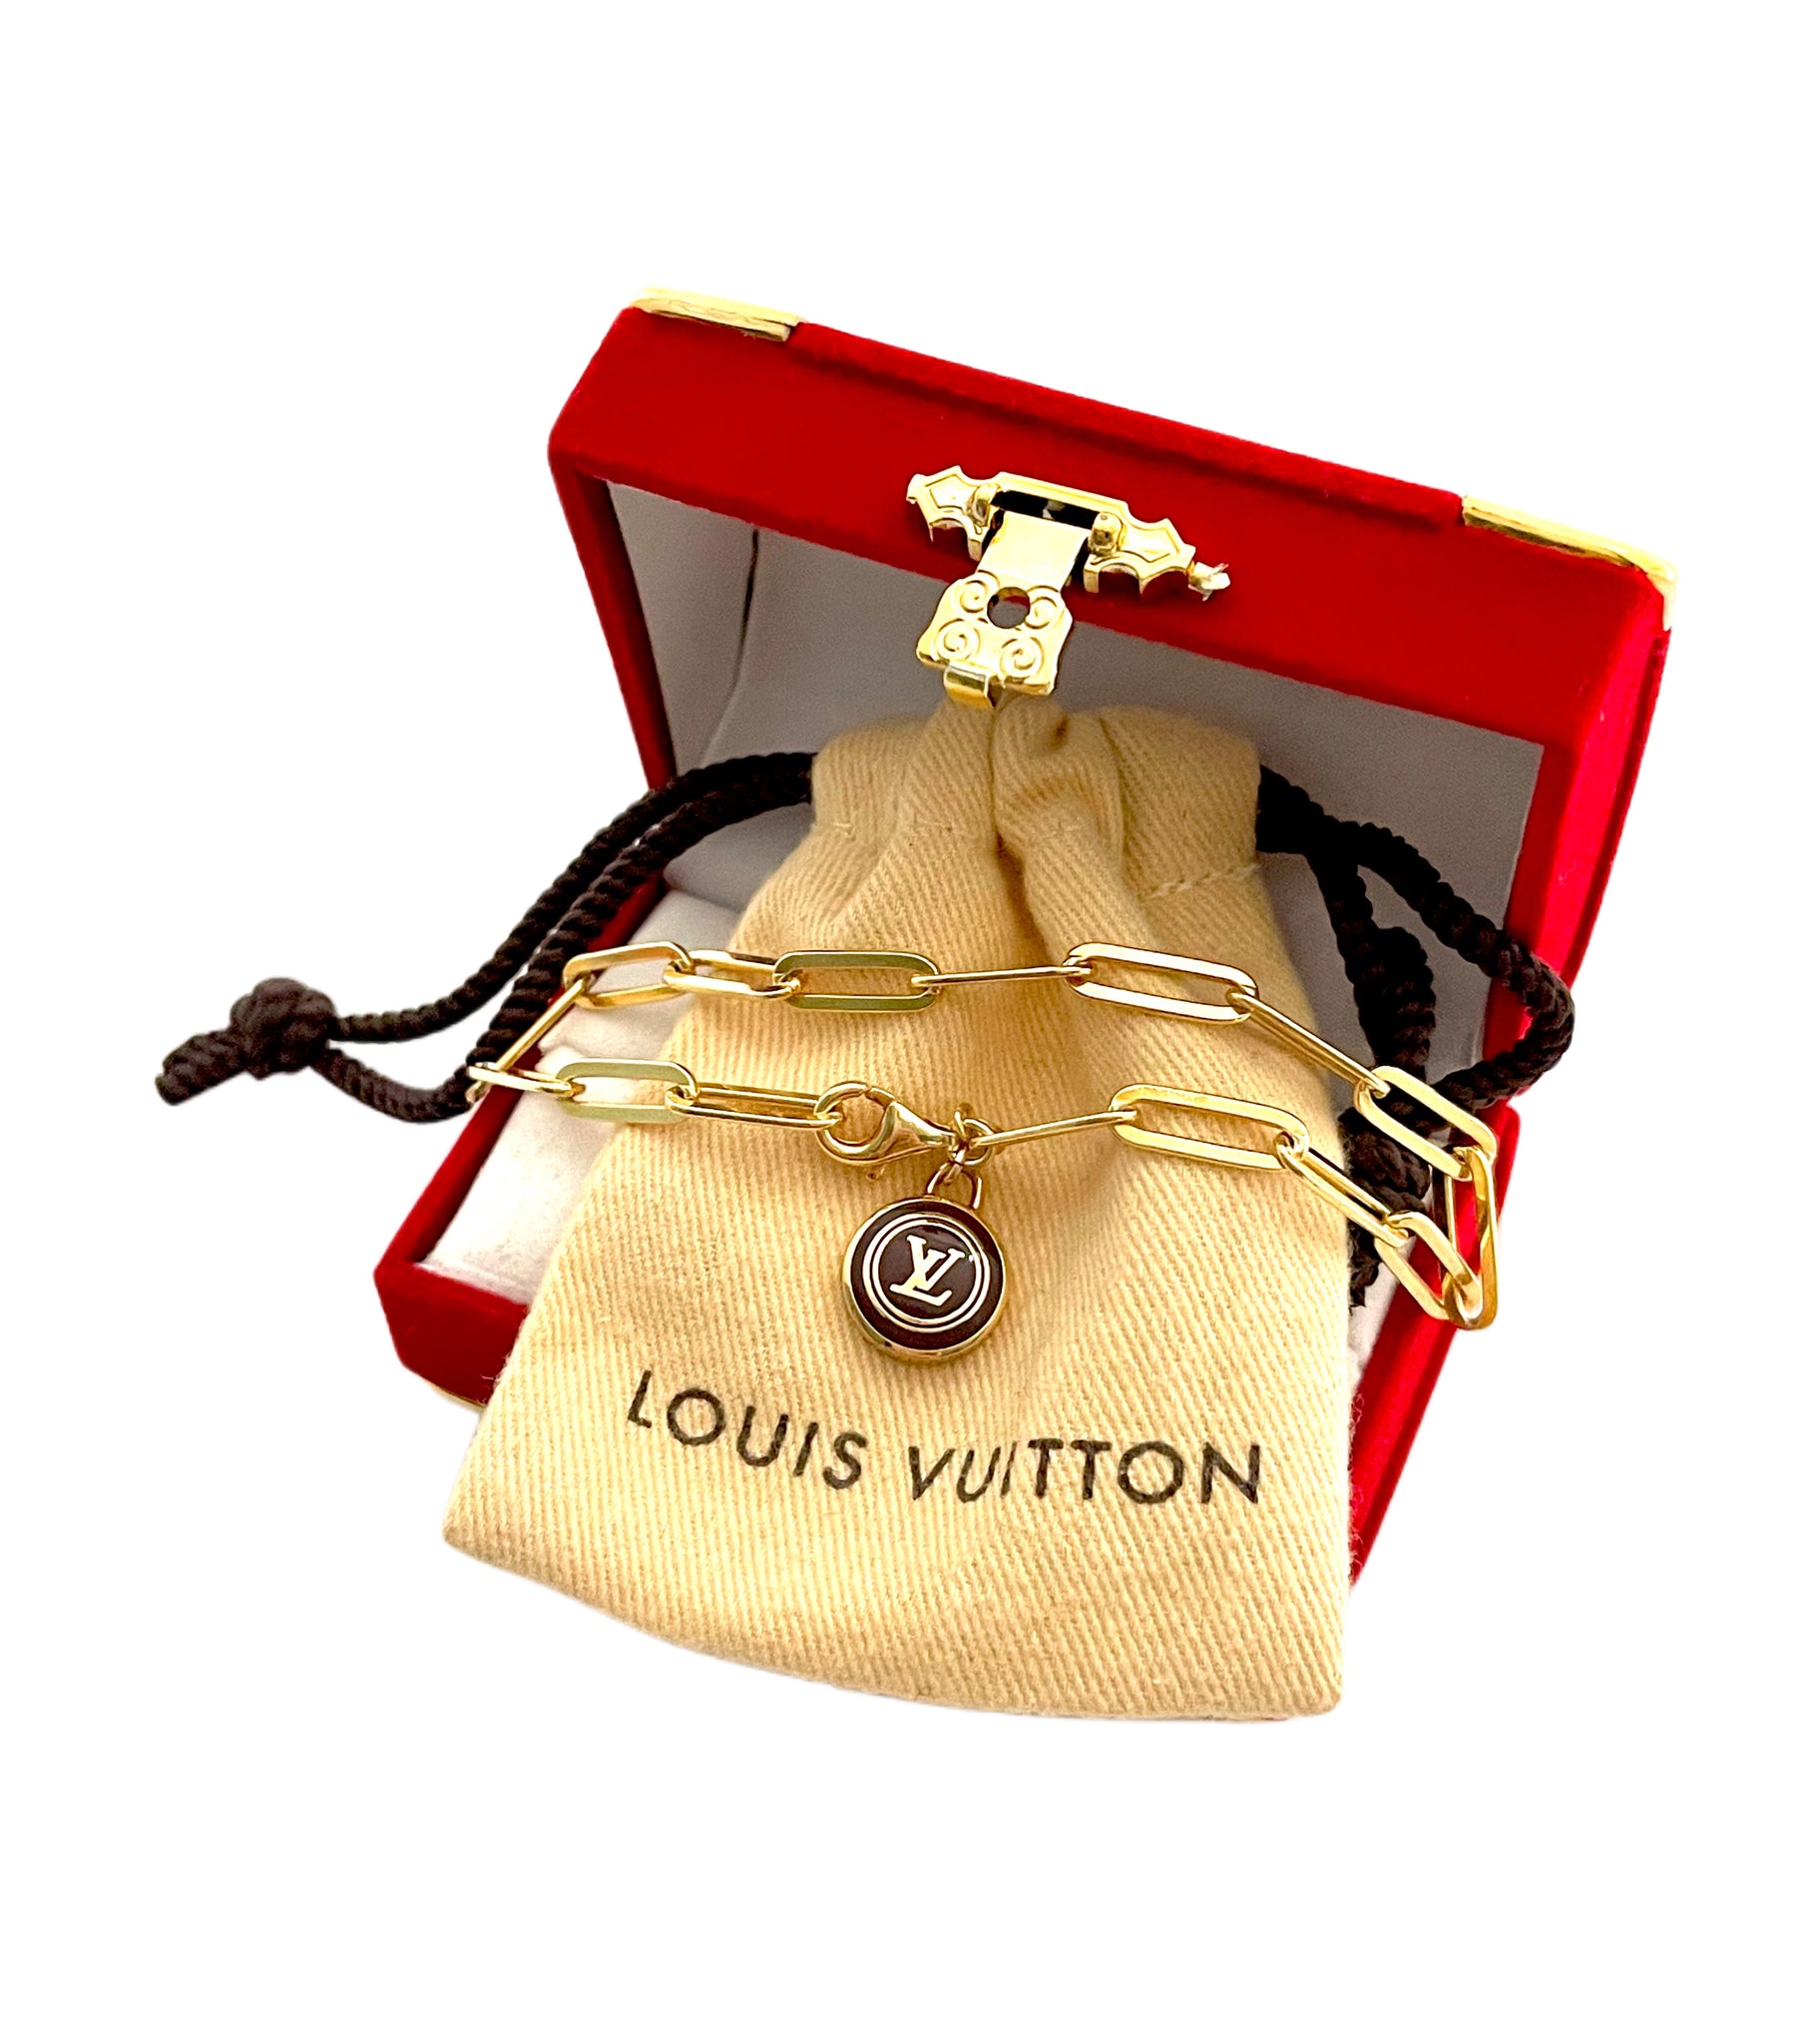 Repurposed Louis Vuitton Repurposed Louis Vuitton items